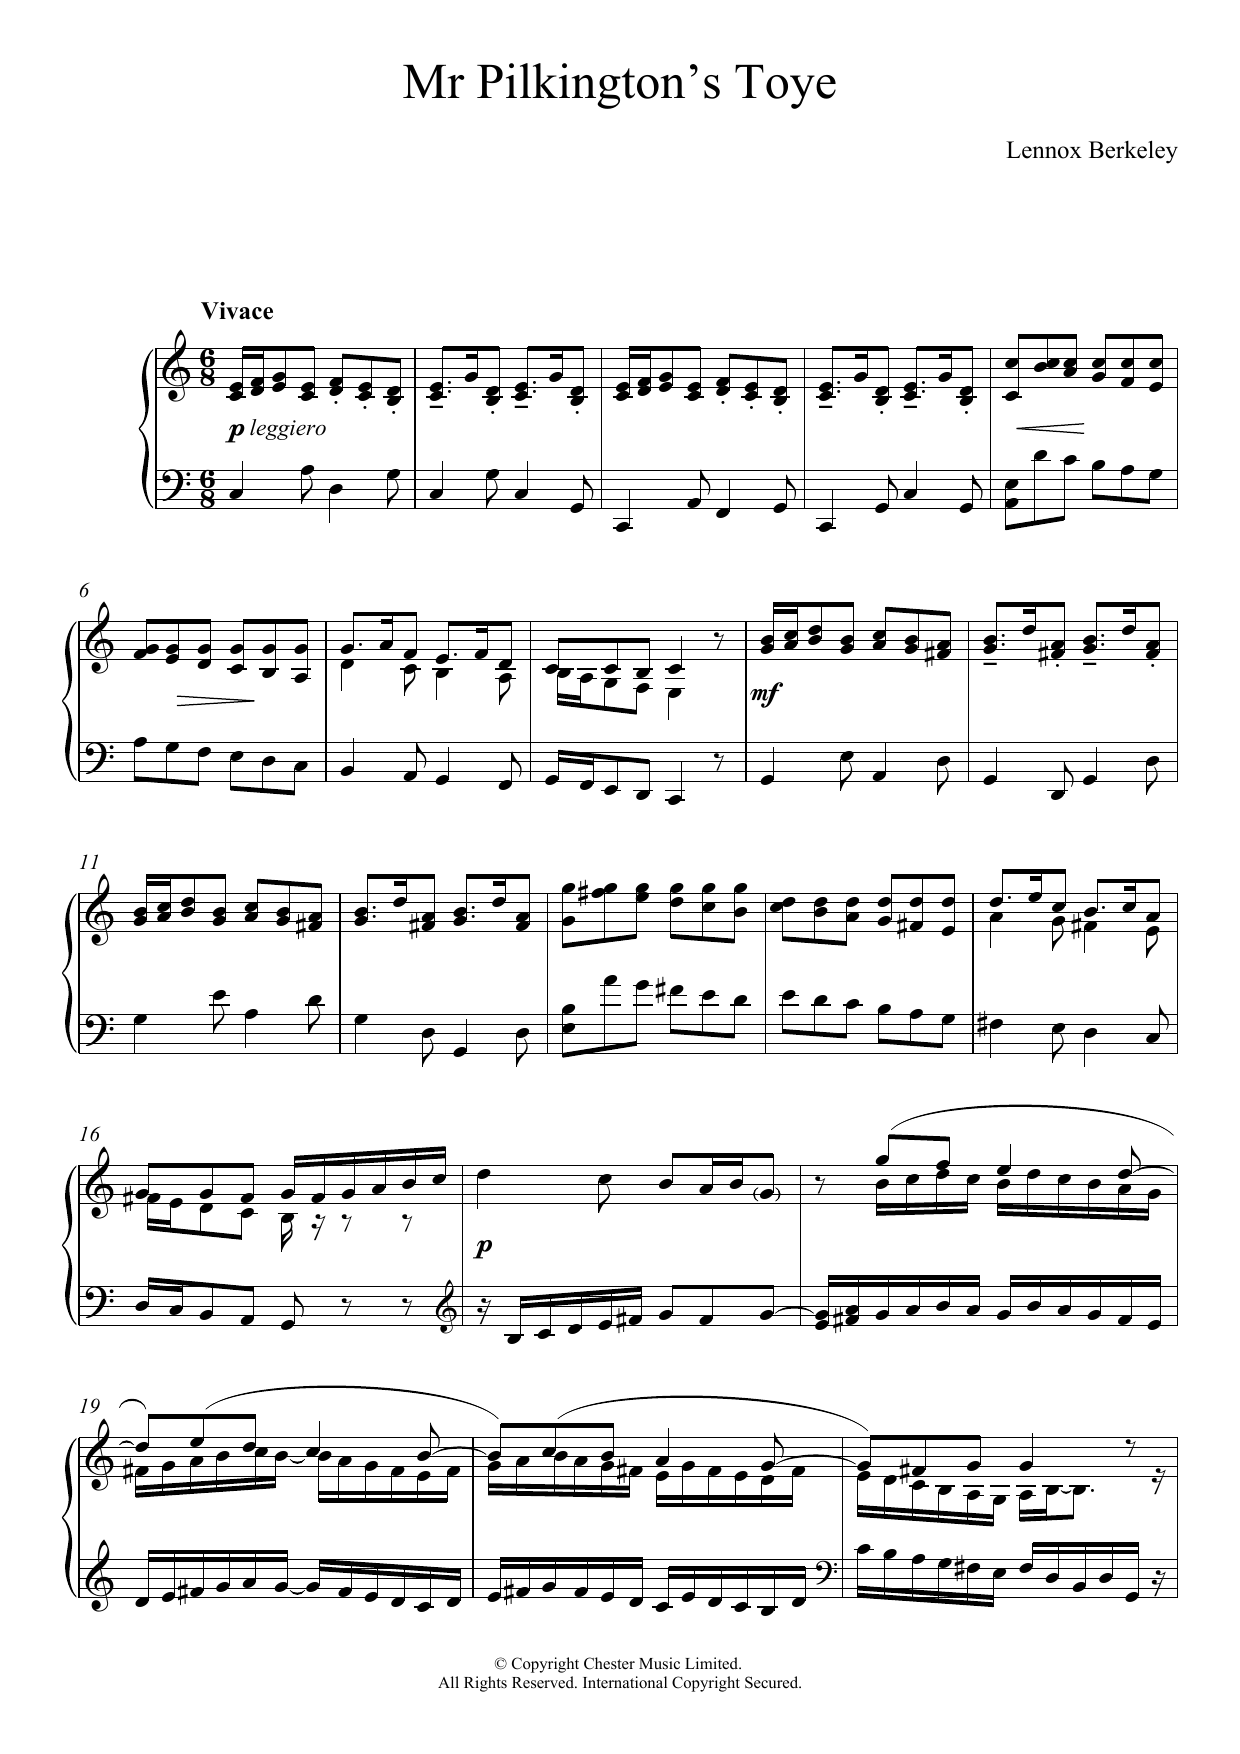 Lennox Berkeley Mr. Pilkington's Toye Sheet Music Notes & Chords for Piano - Download or Print PDF